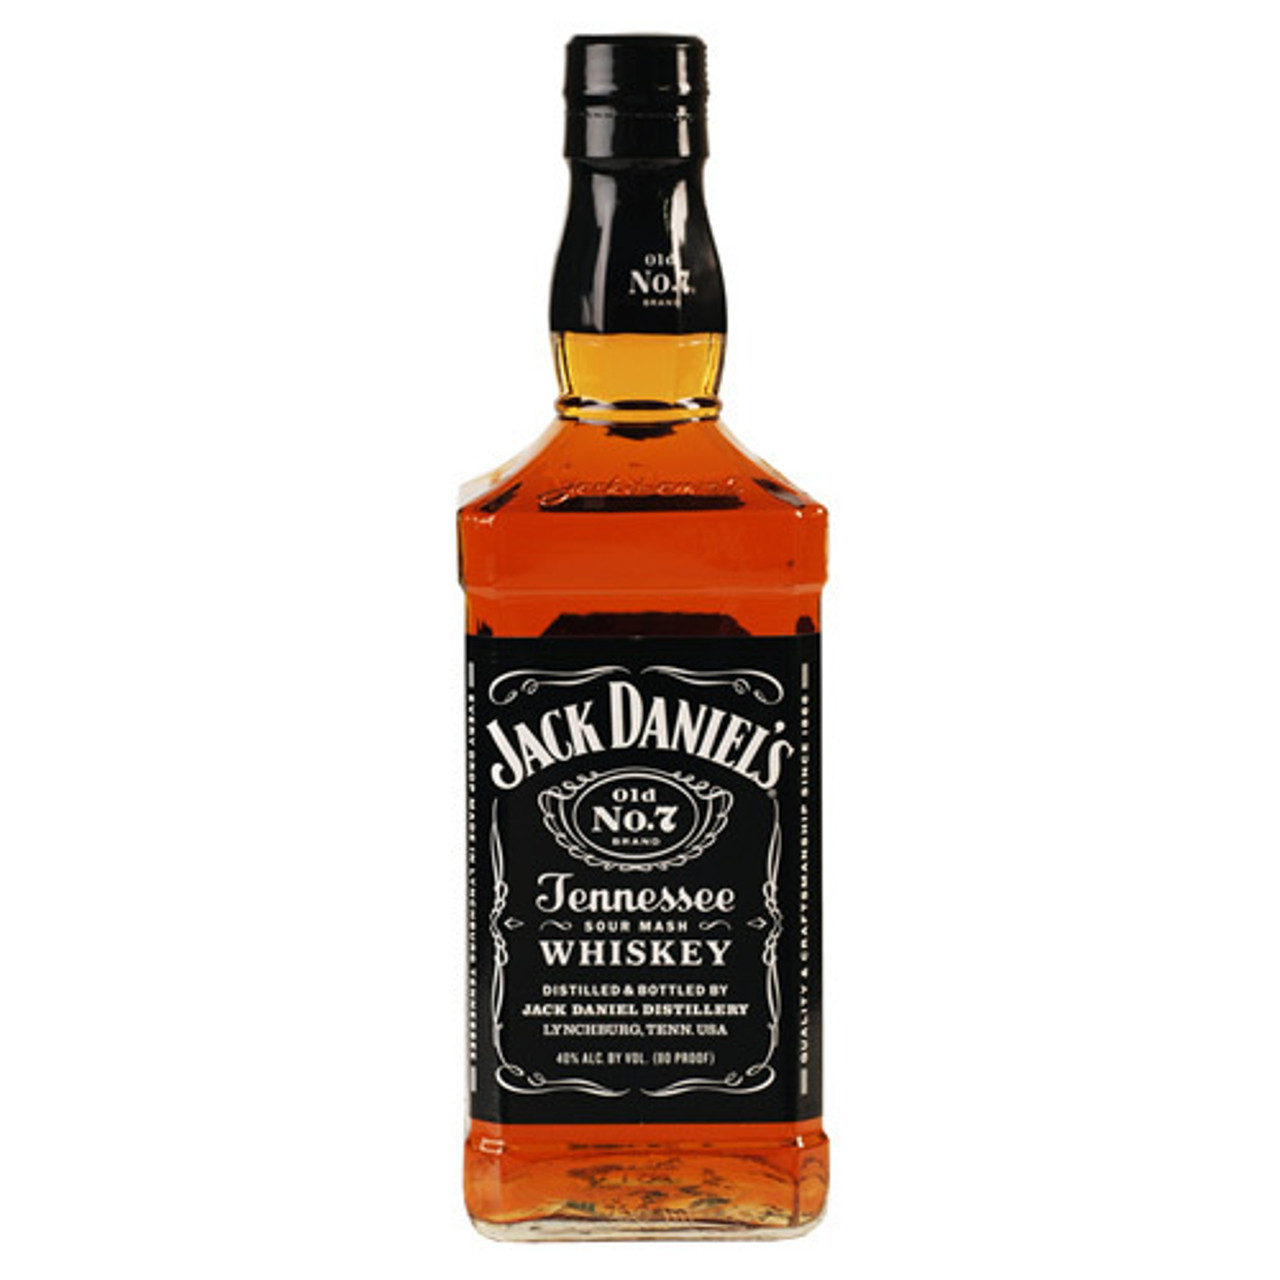 Jack Daniel's Tennessee Honey Liqueur 750ml